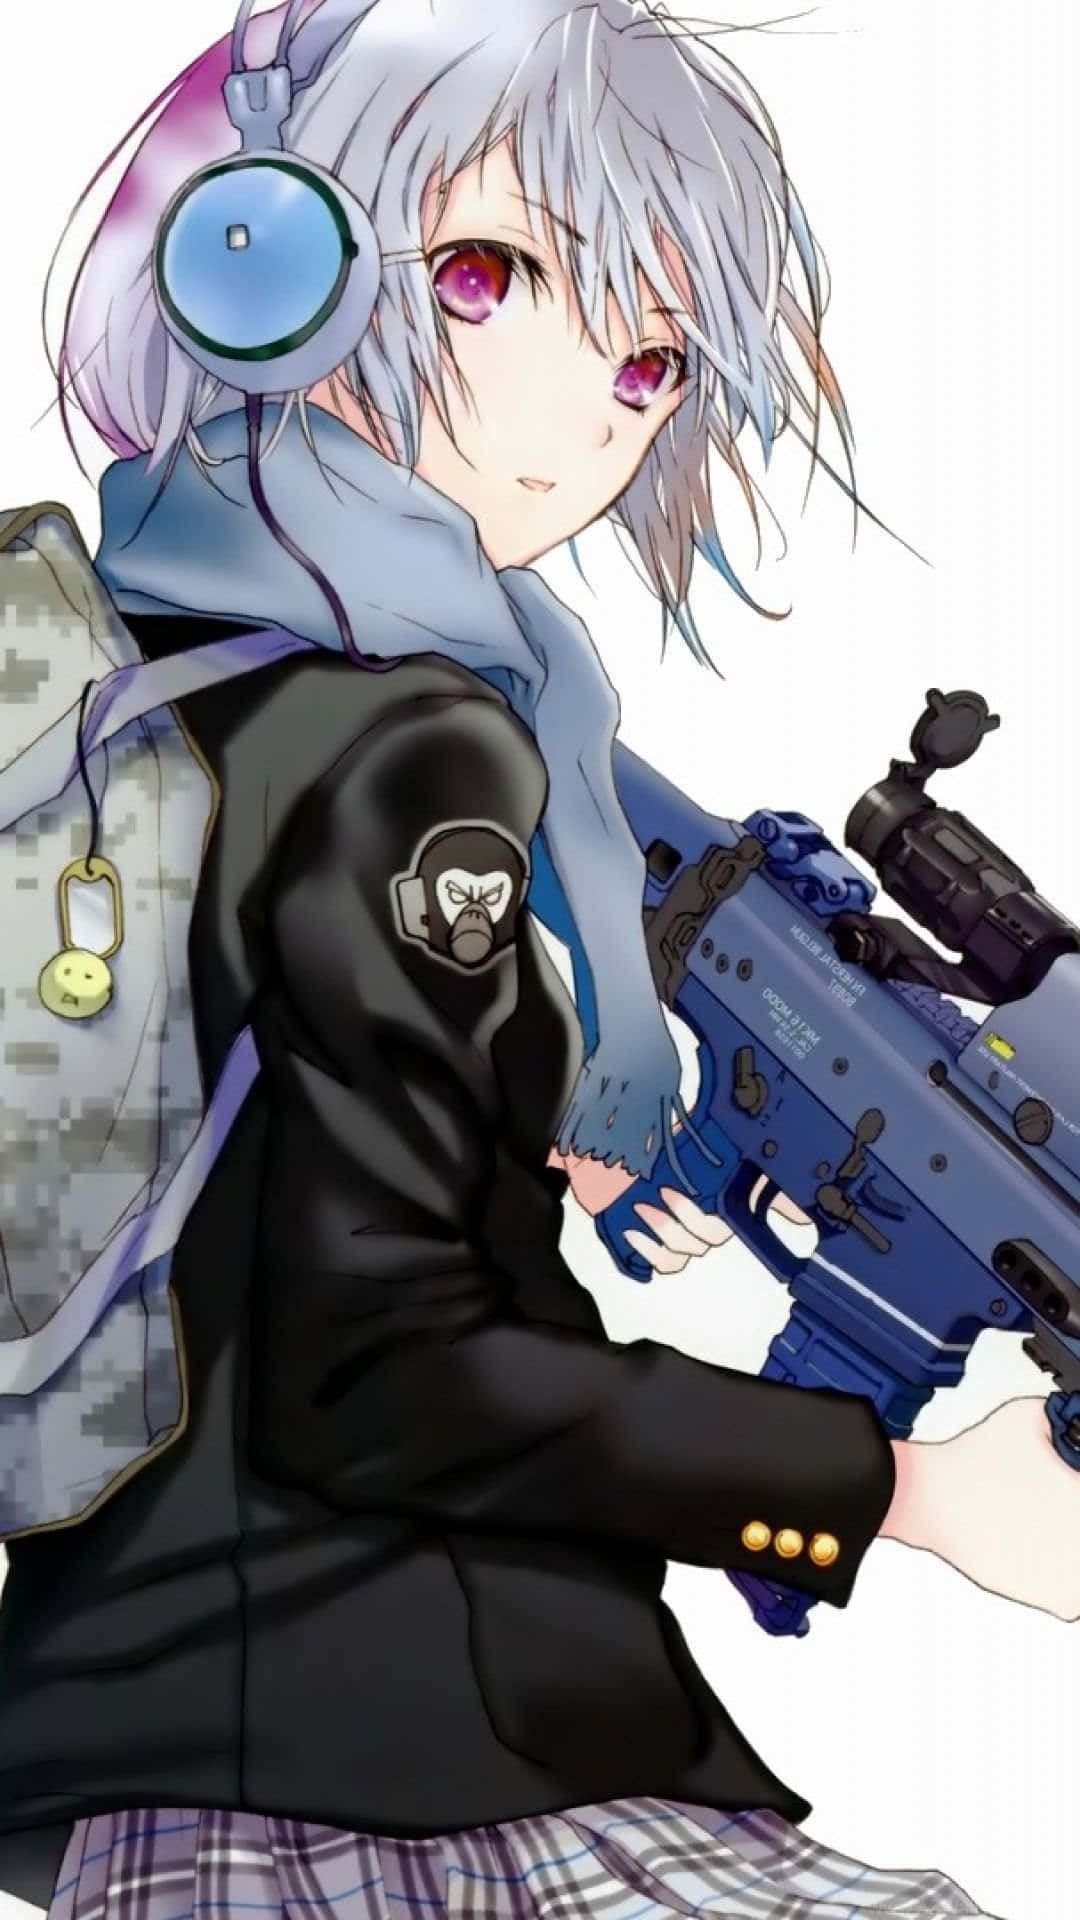 Tomboy Girl Holding Gun Wallpaper